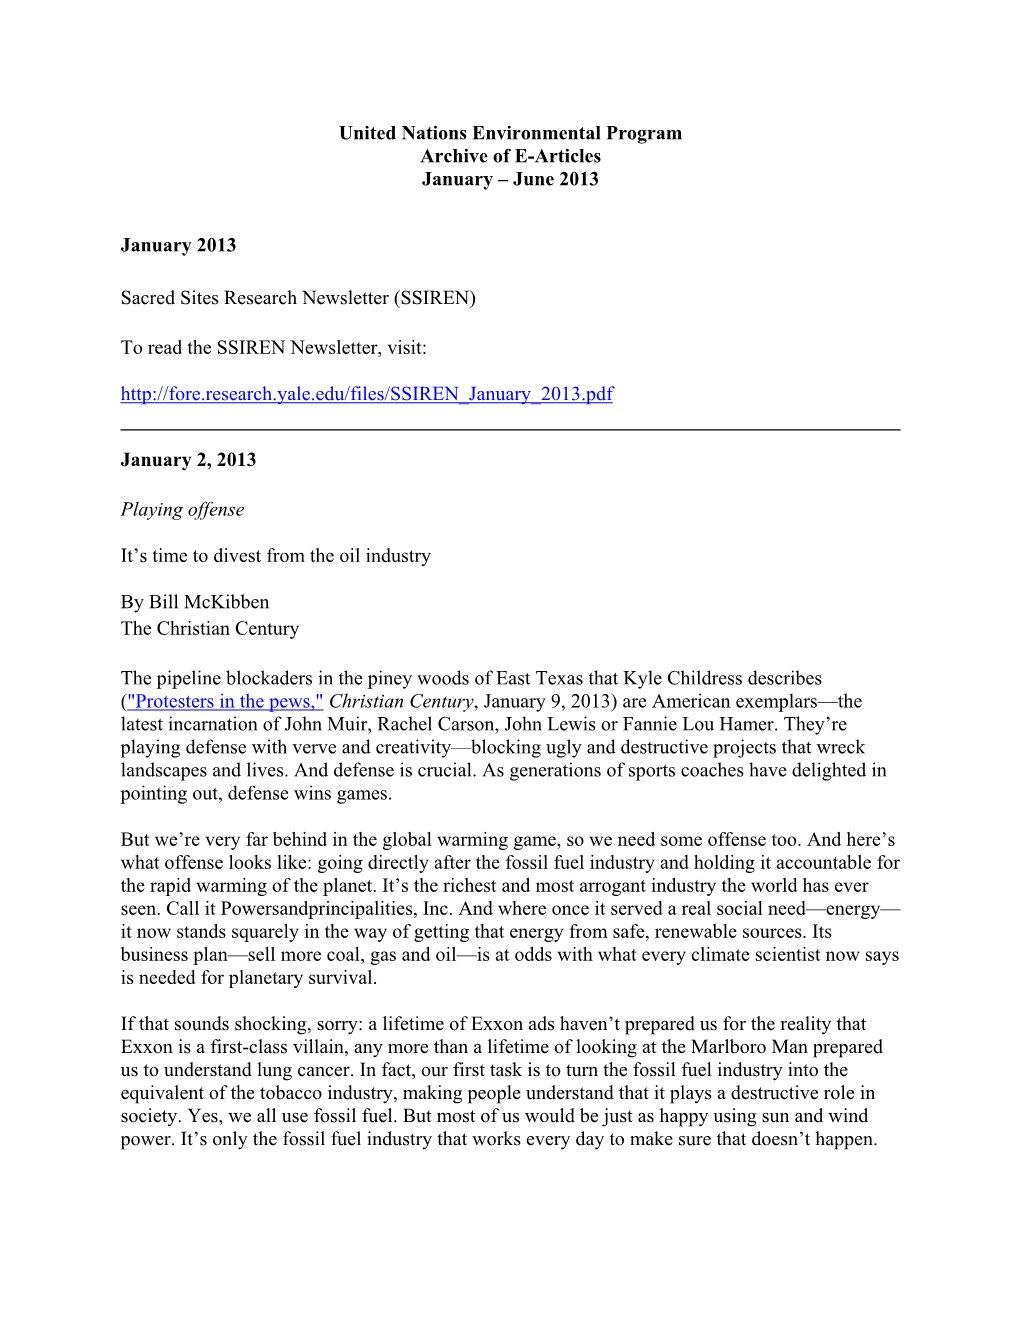 United Nations Environmental Program Archive of E-Articles January – June 2013